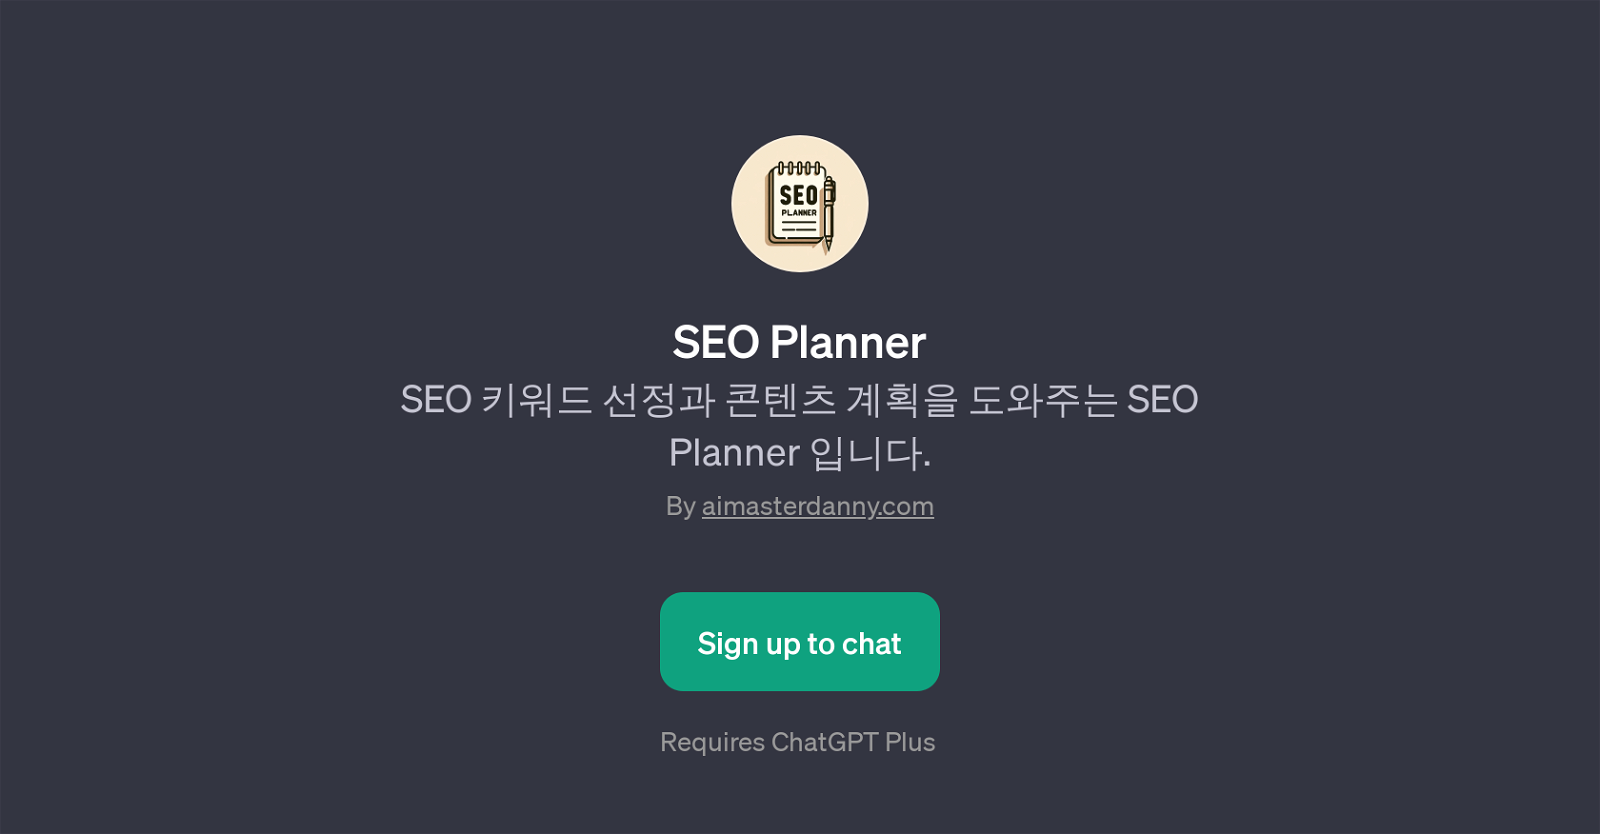 SEO Planner website